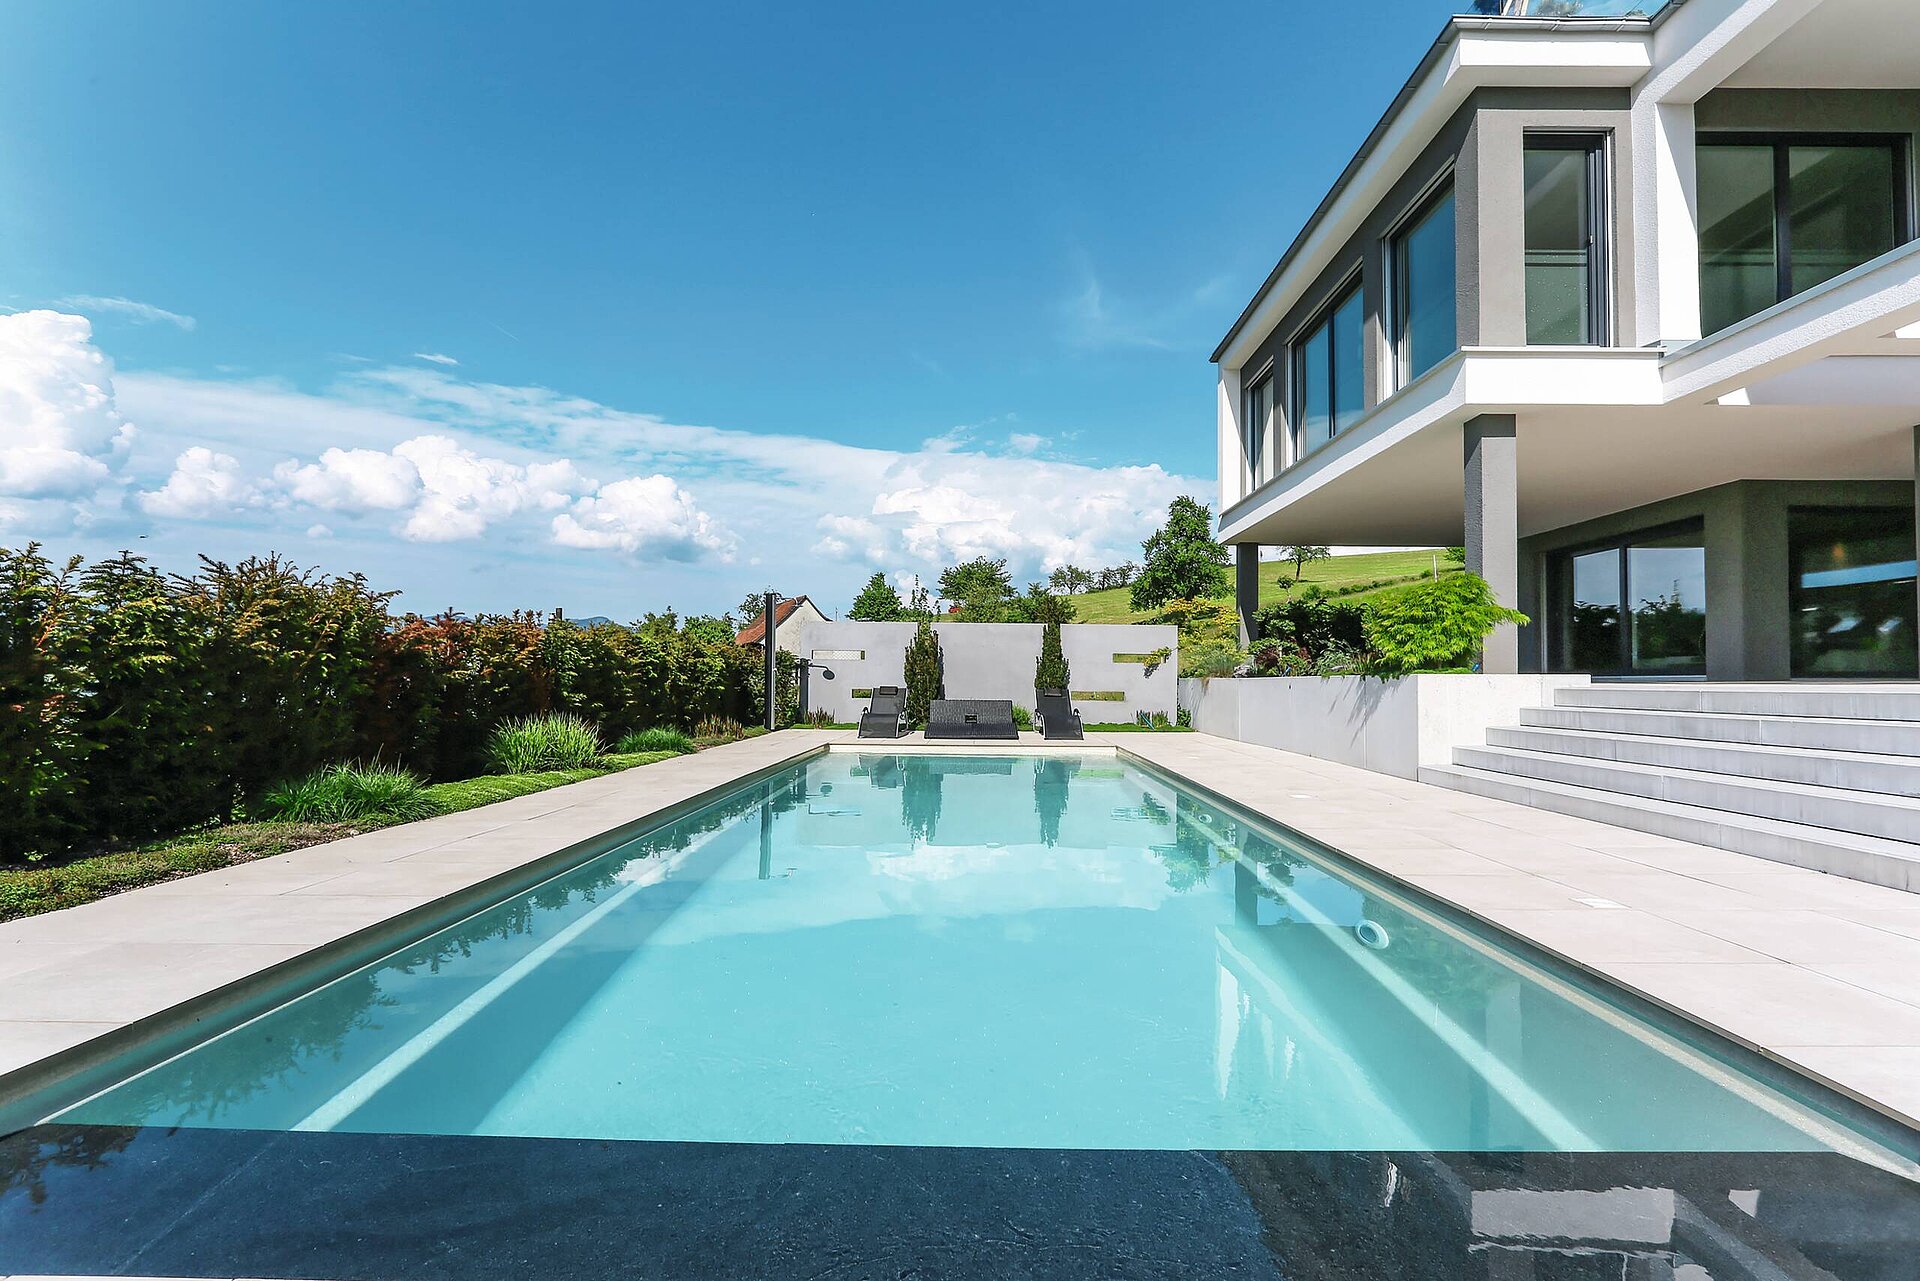 Bespoke 3-storey prefab home with pool